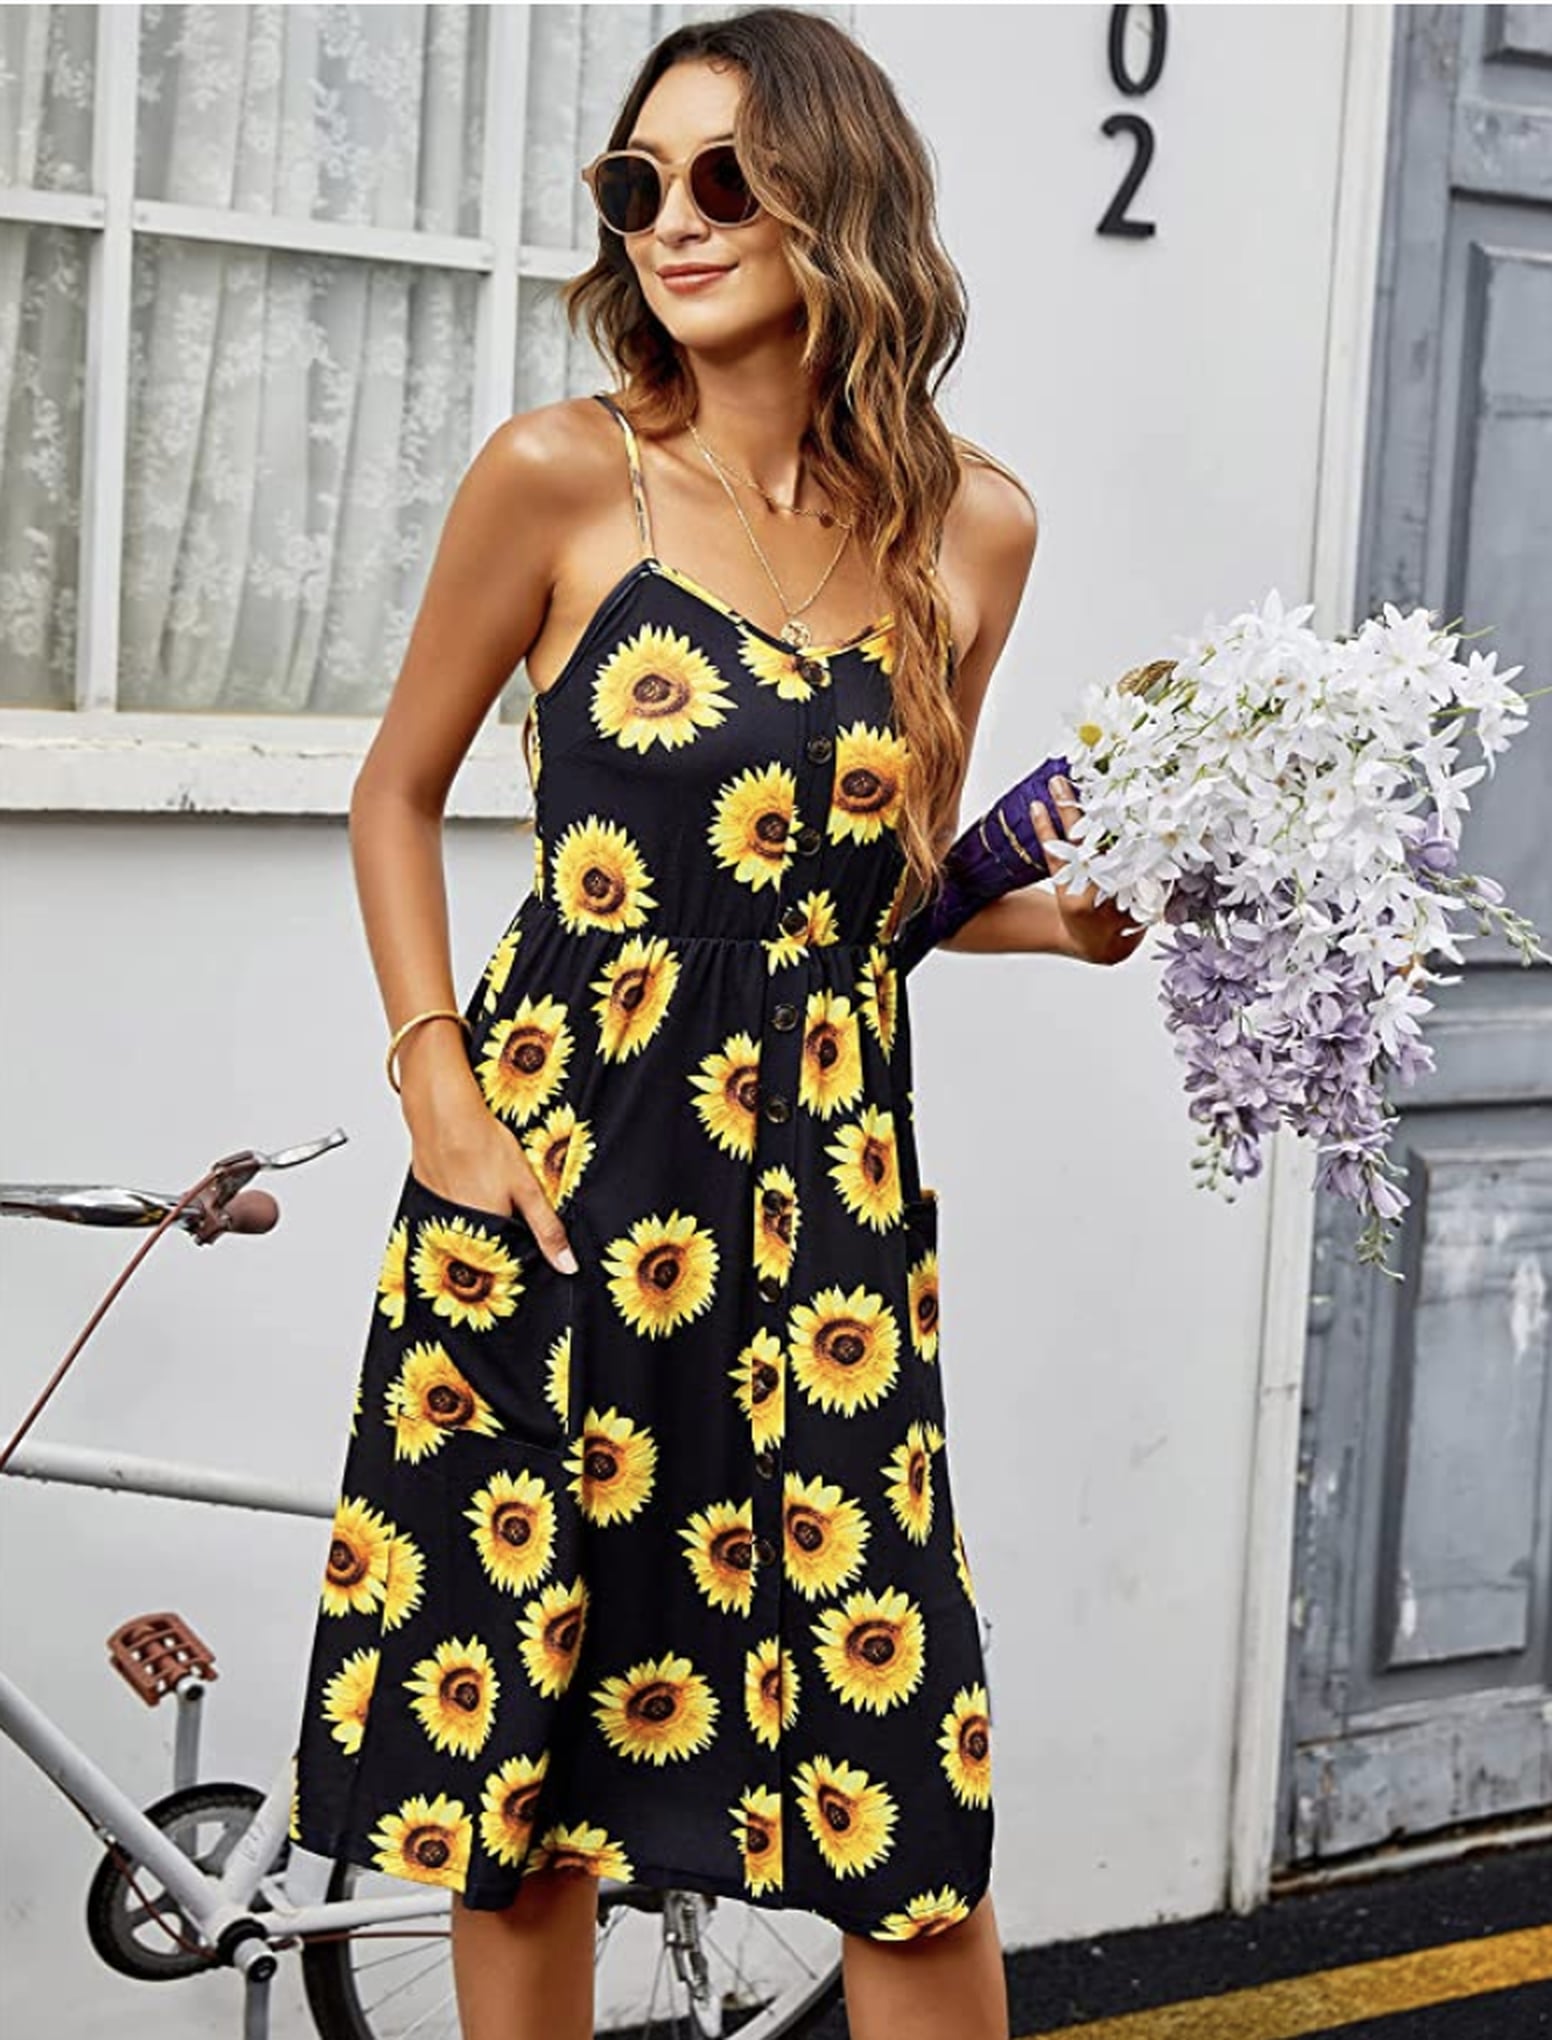 Cute Dresses With Pockets on Amazon | POPSUGAR Fashion